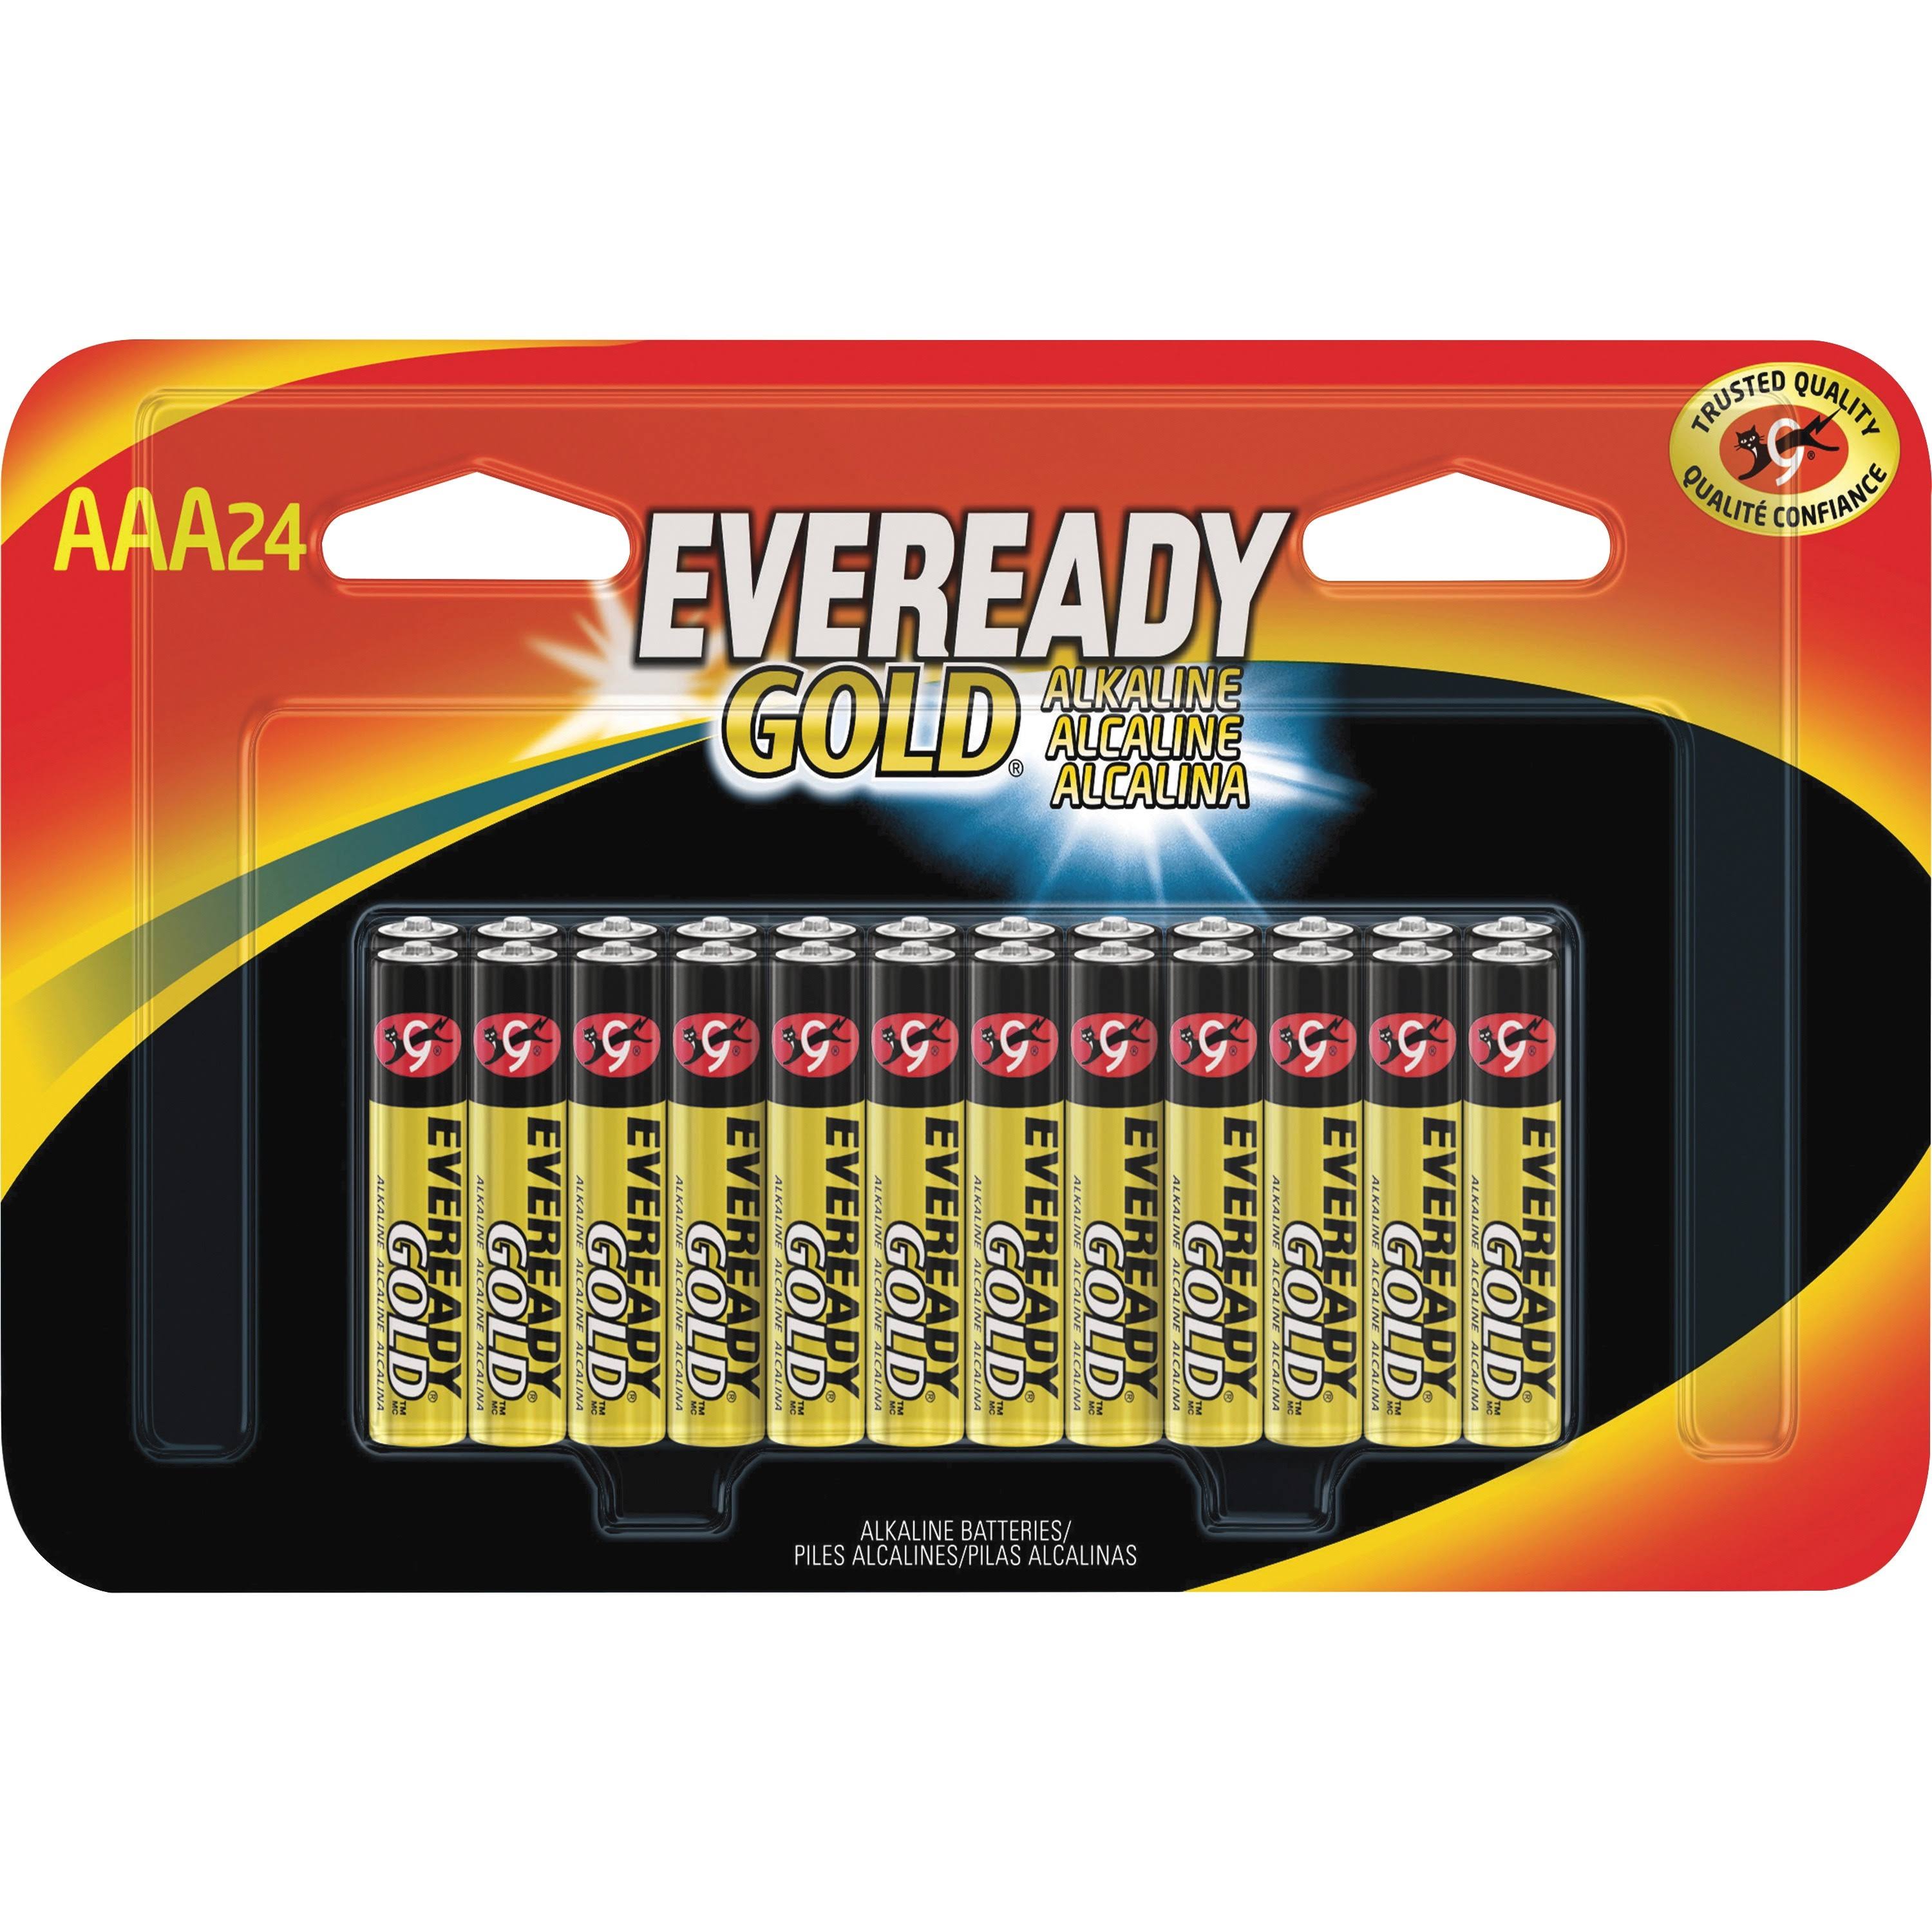 Eveready Gold Alkaline Batteries - AAA, 24pk